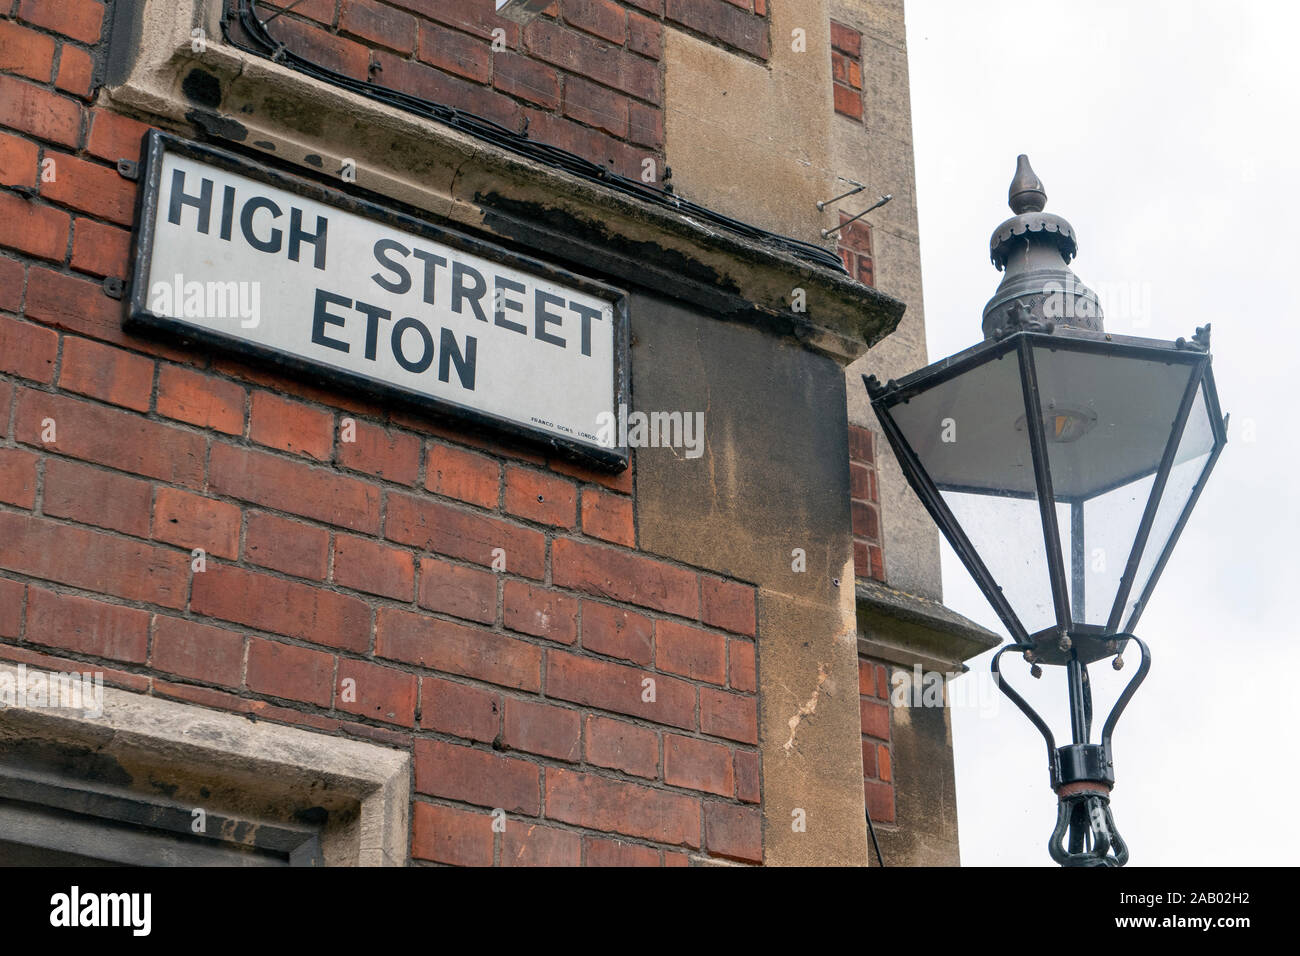 Eton High Street sign and old street lamp Berkshire England Stock Photo